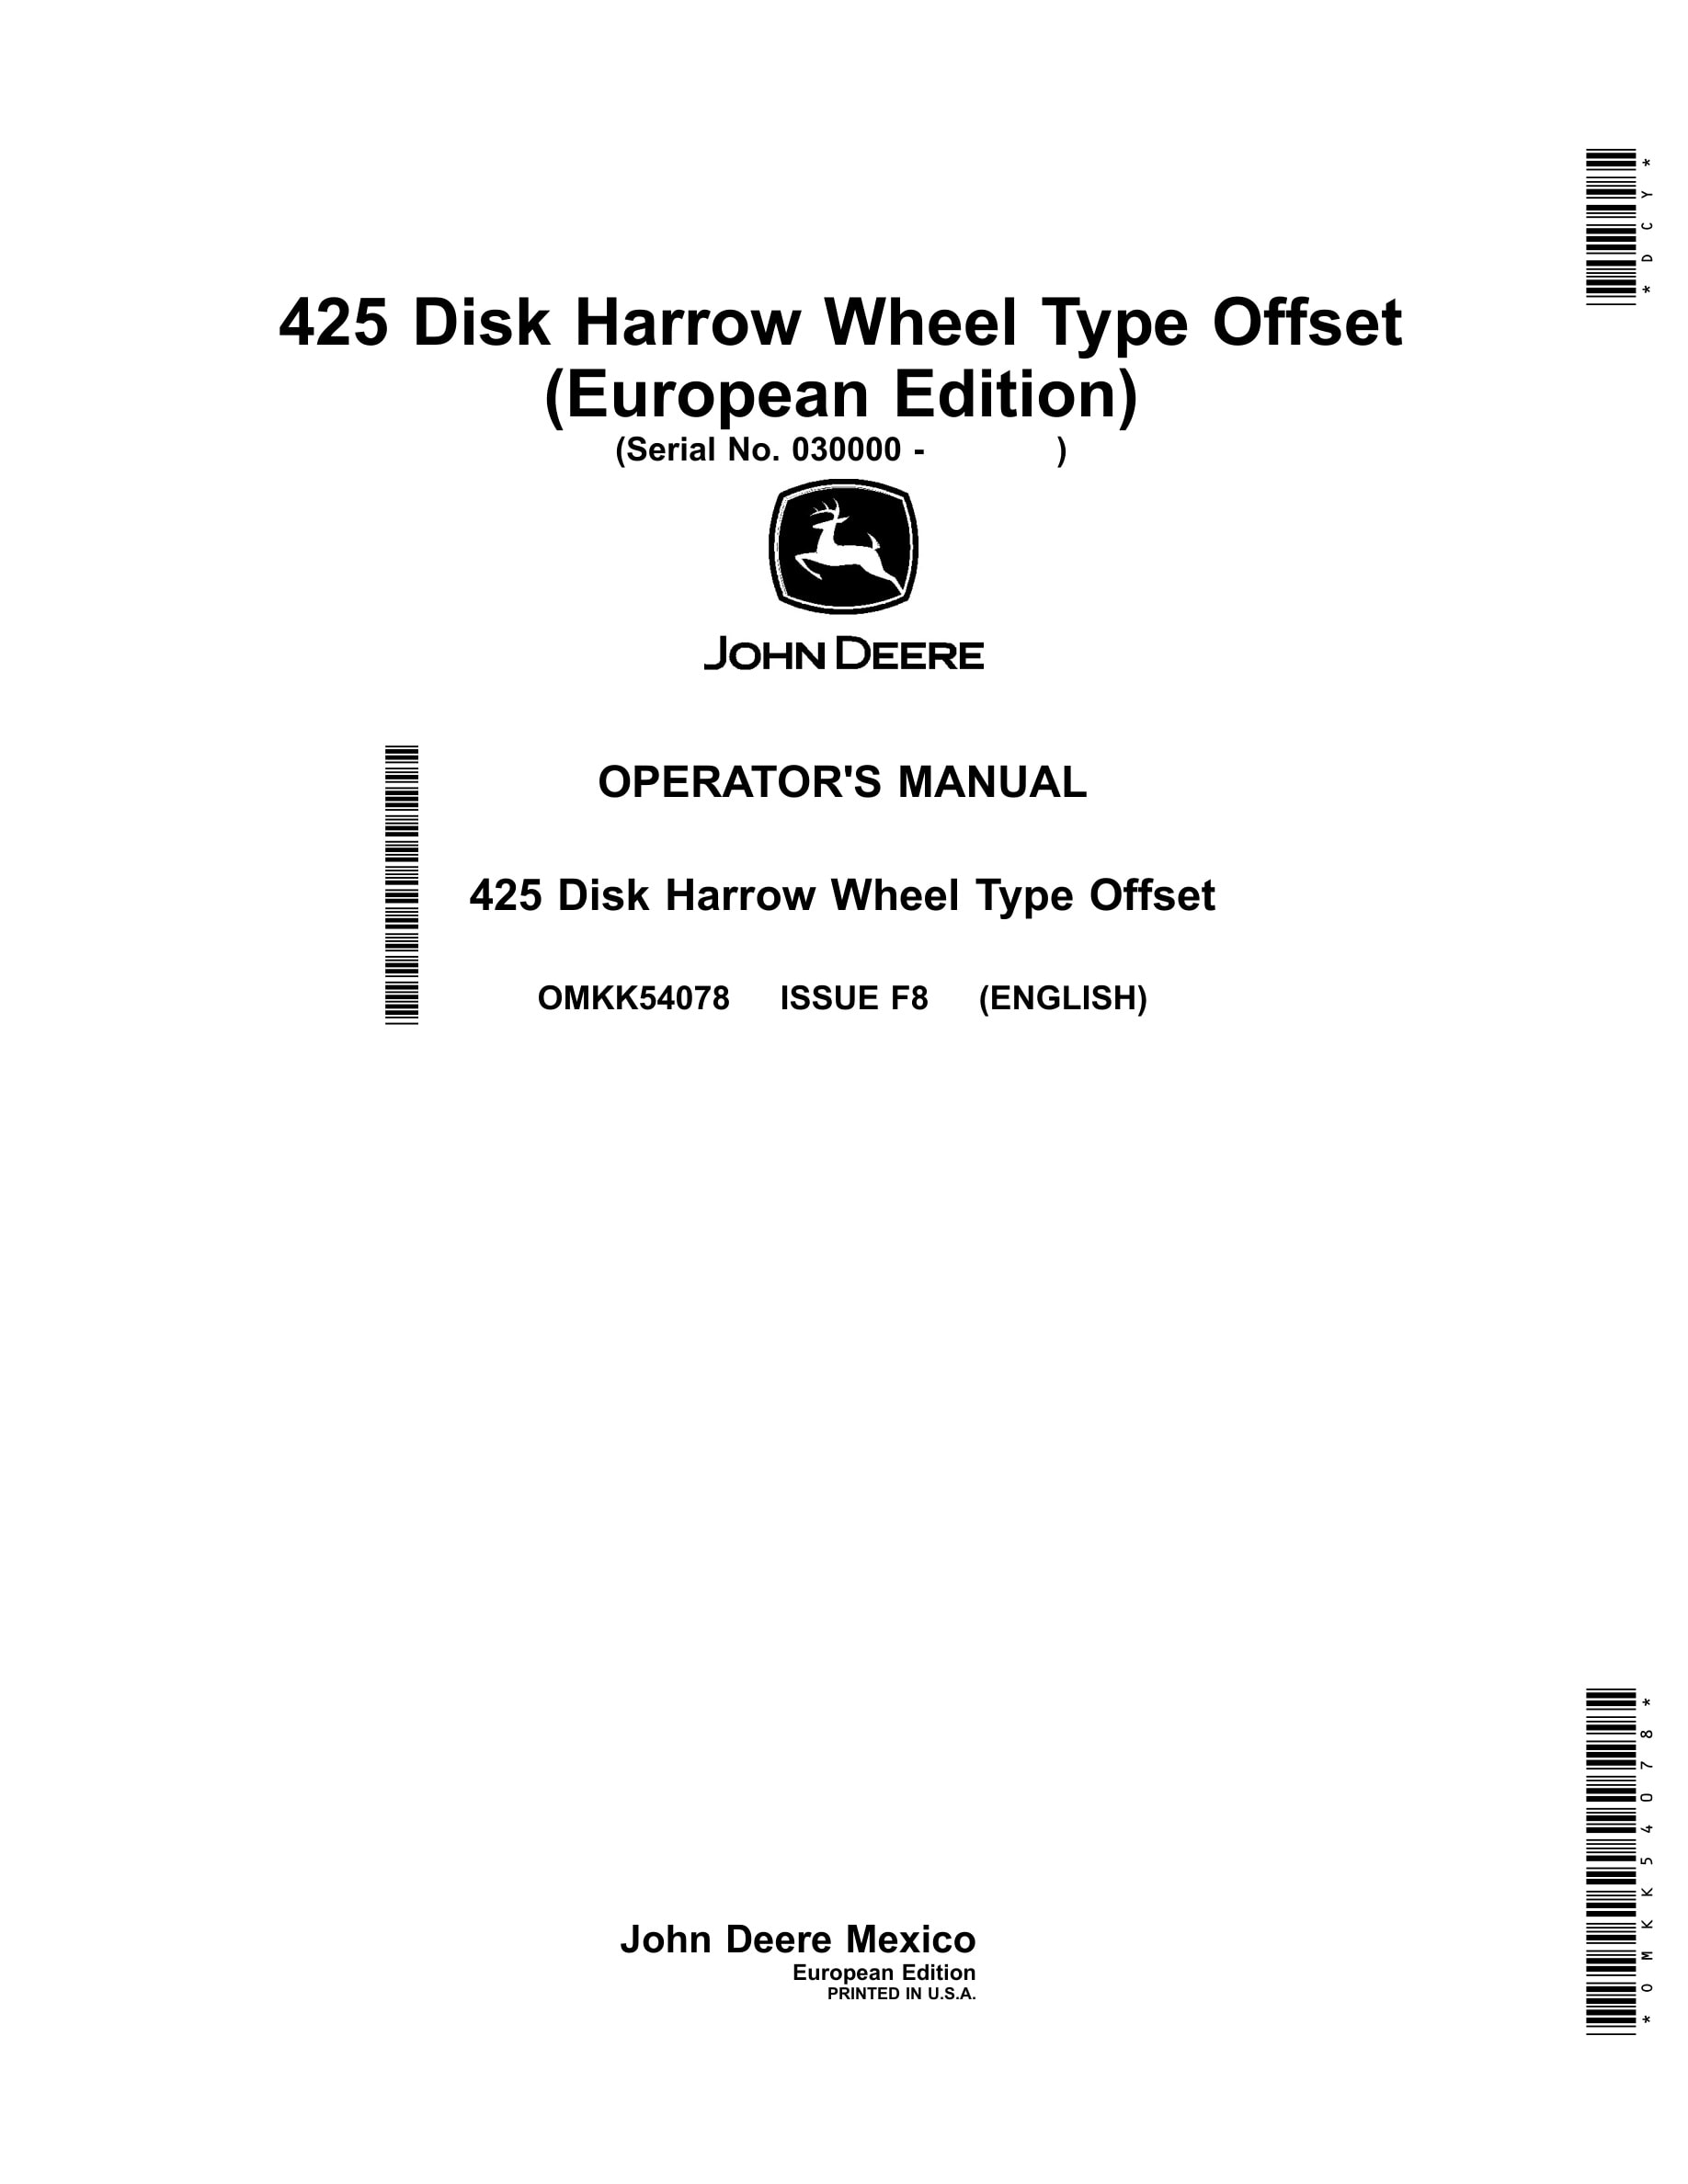 John Deere 425 Disk Harrow Wheel Type Offset Operator Manual OMKK54078-1